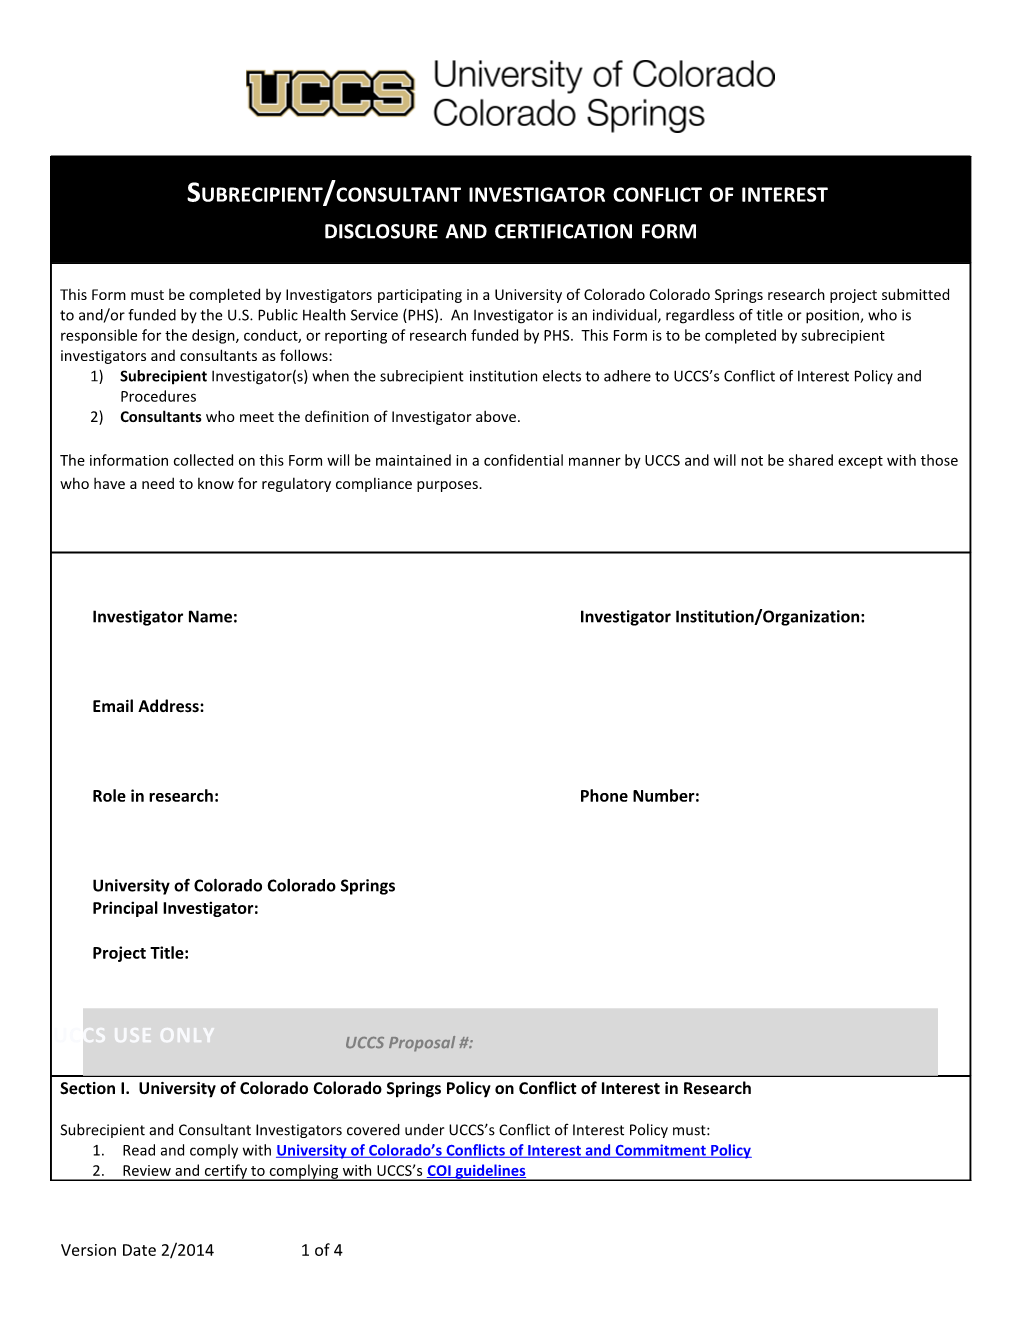 Subrecipient/Consultant Investigator Conflict of Interest Disclosure and Certification Form